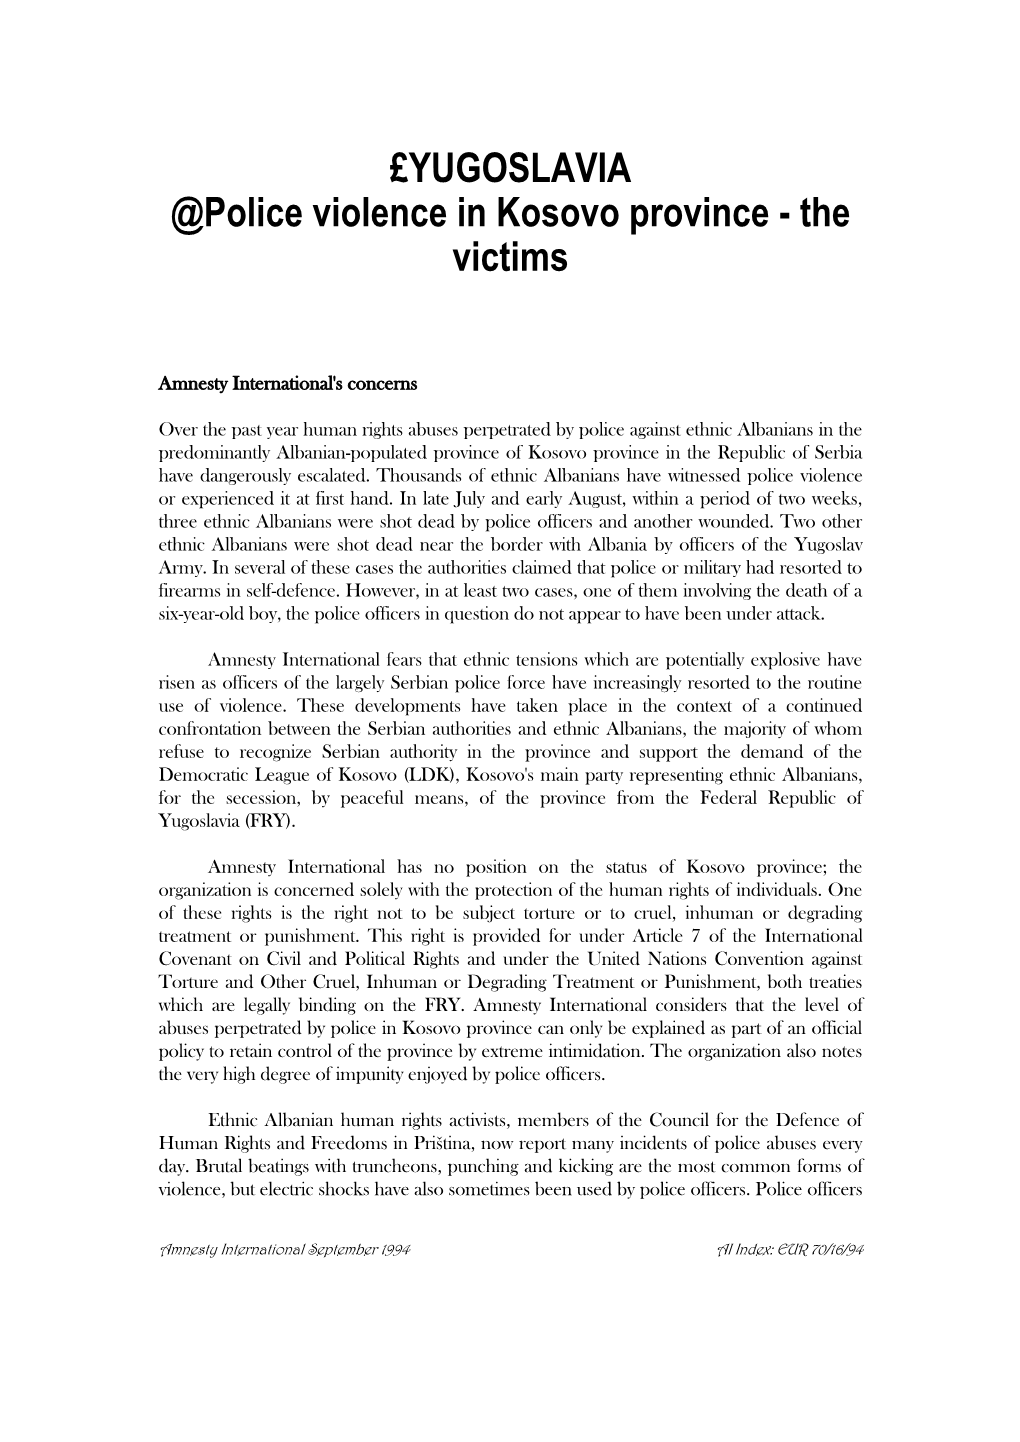 £YUGOSLAVIA @Police Violence in Kosovo Province - the Victims